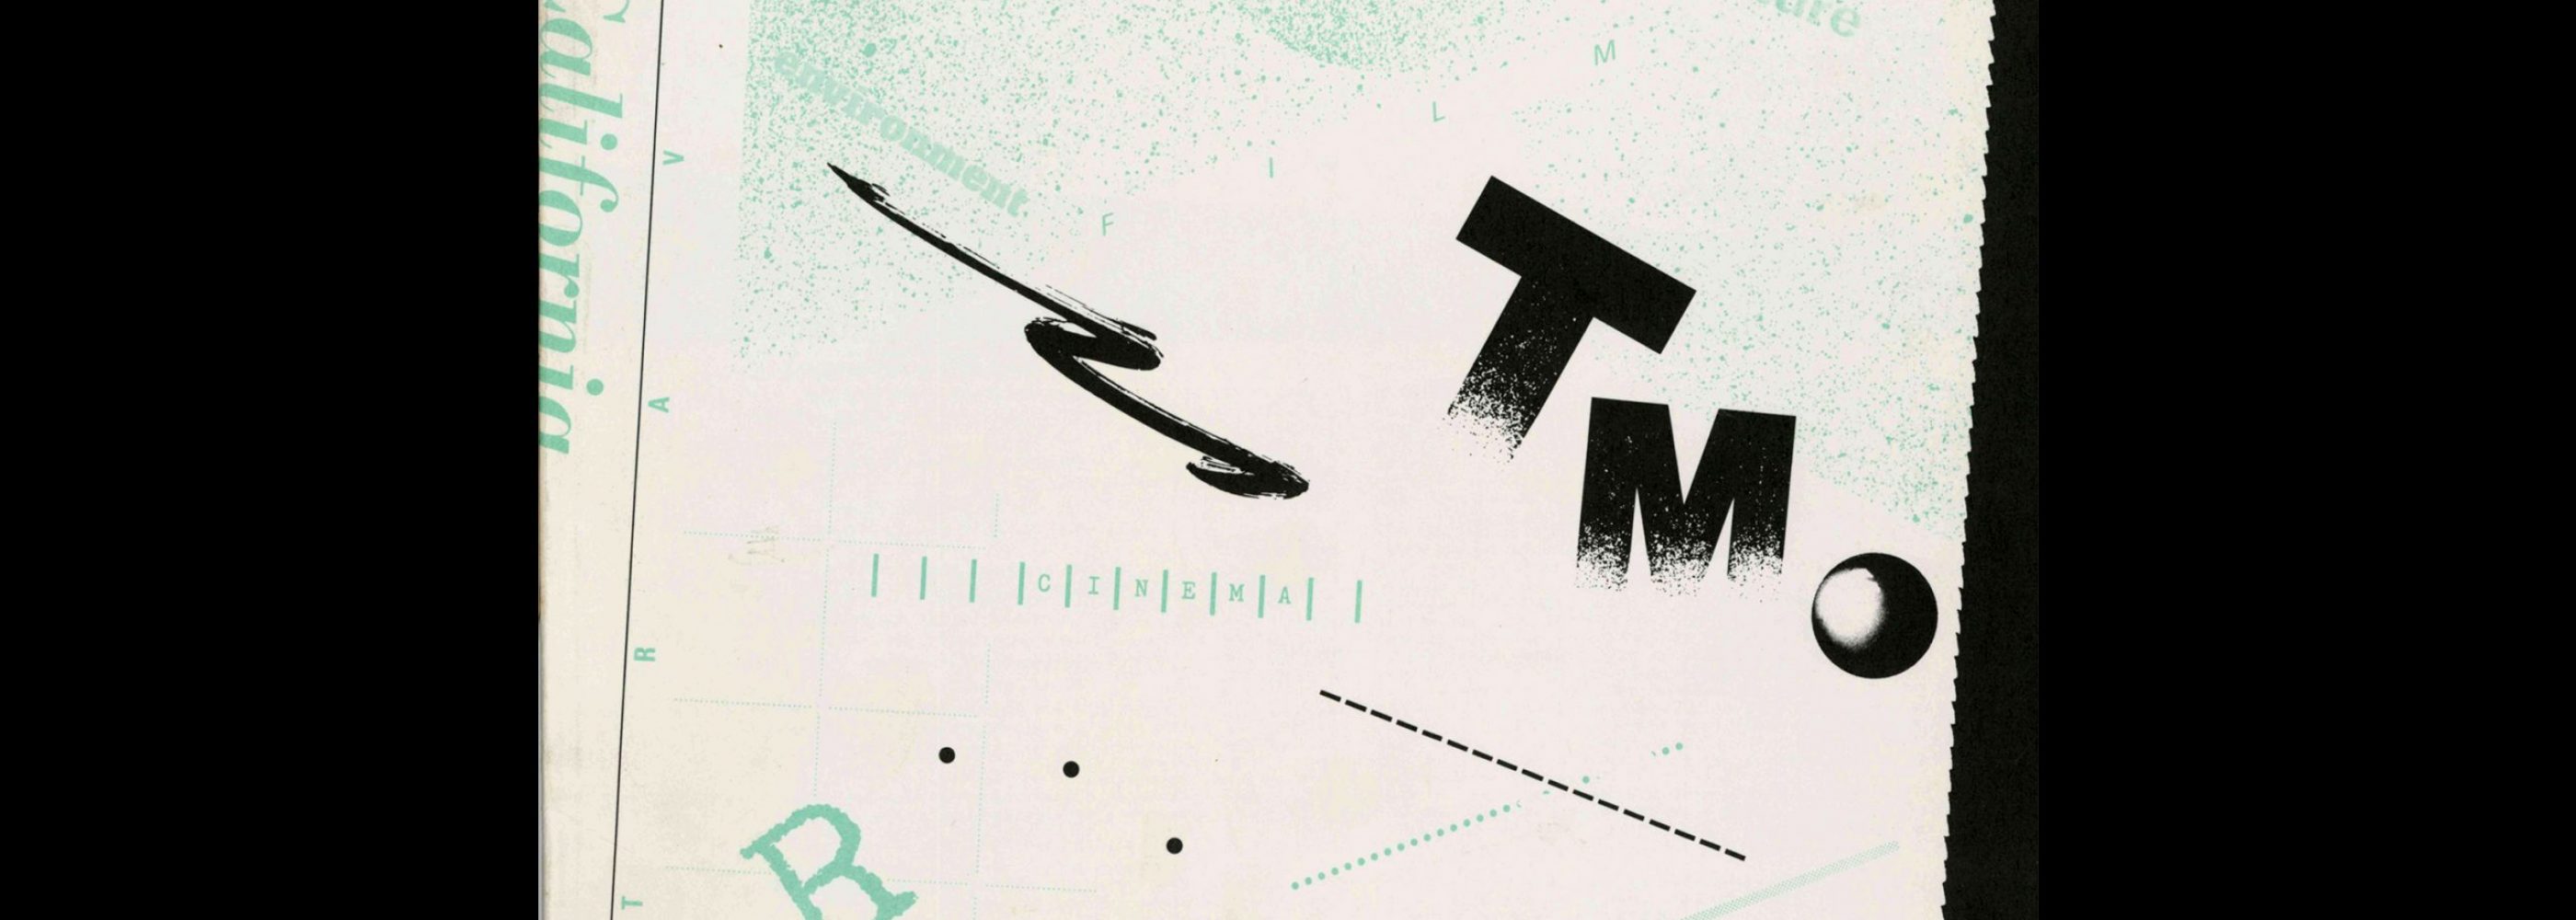 Typografische Monatsblätter, 5, 1980. Cover design by Willi Kunz and Grace Kao